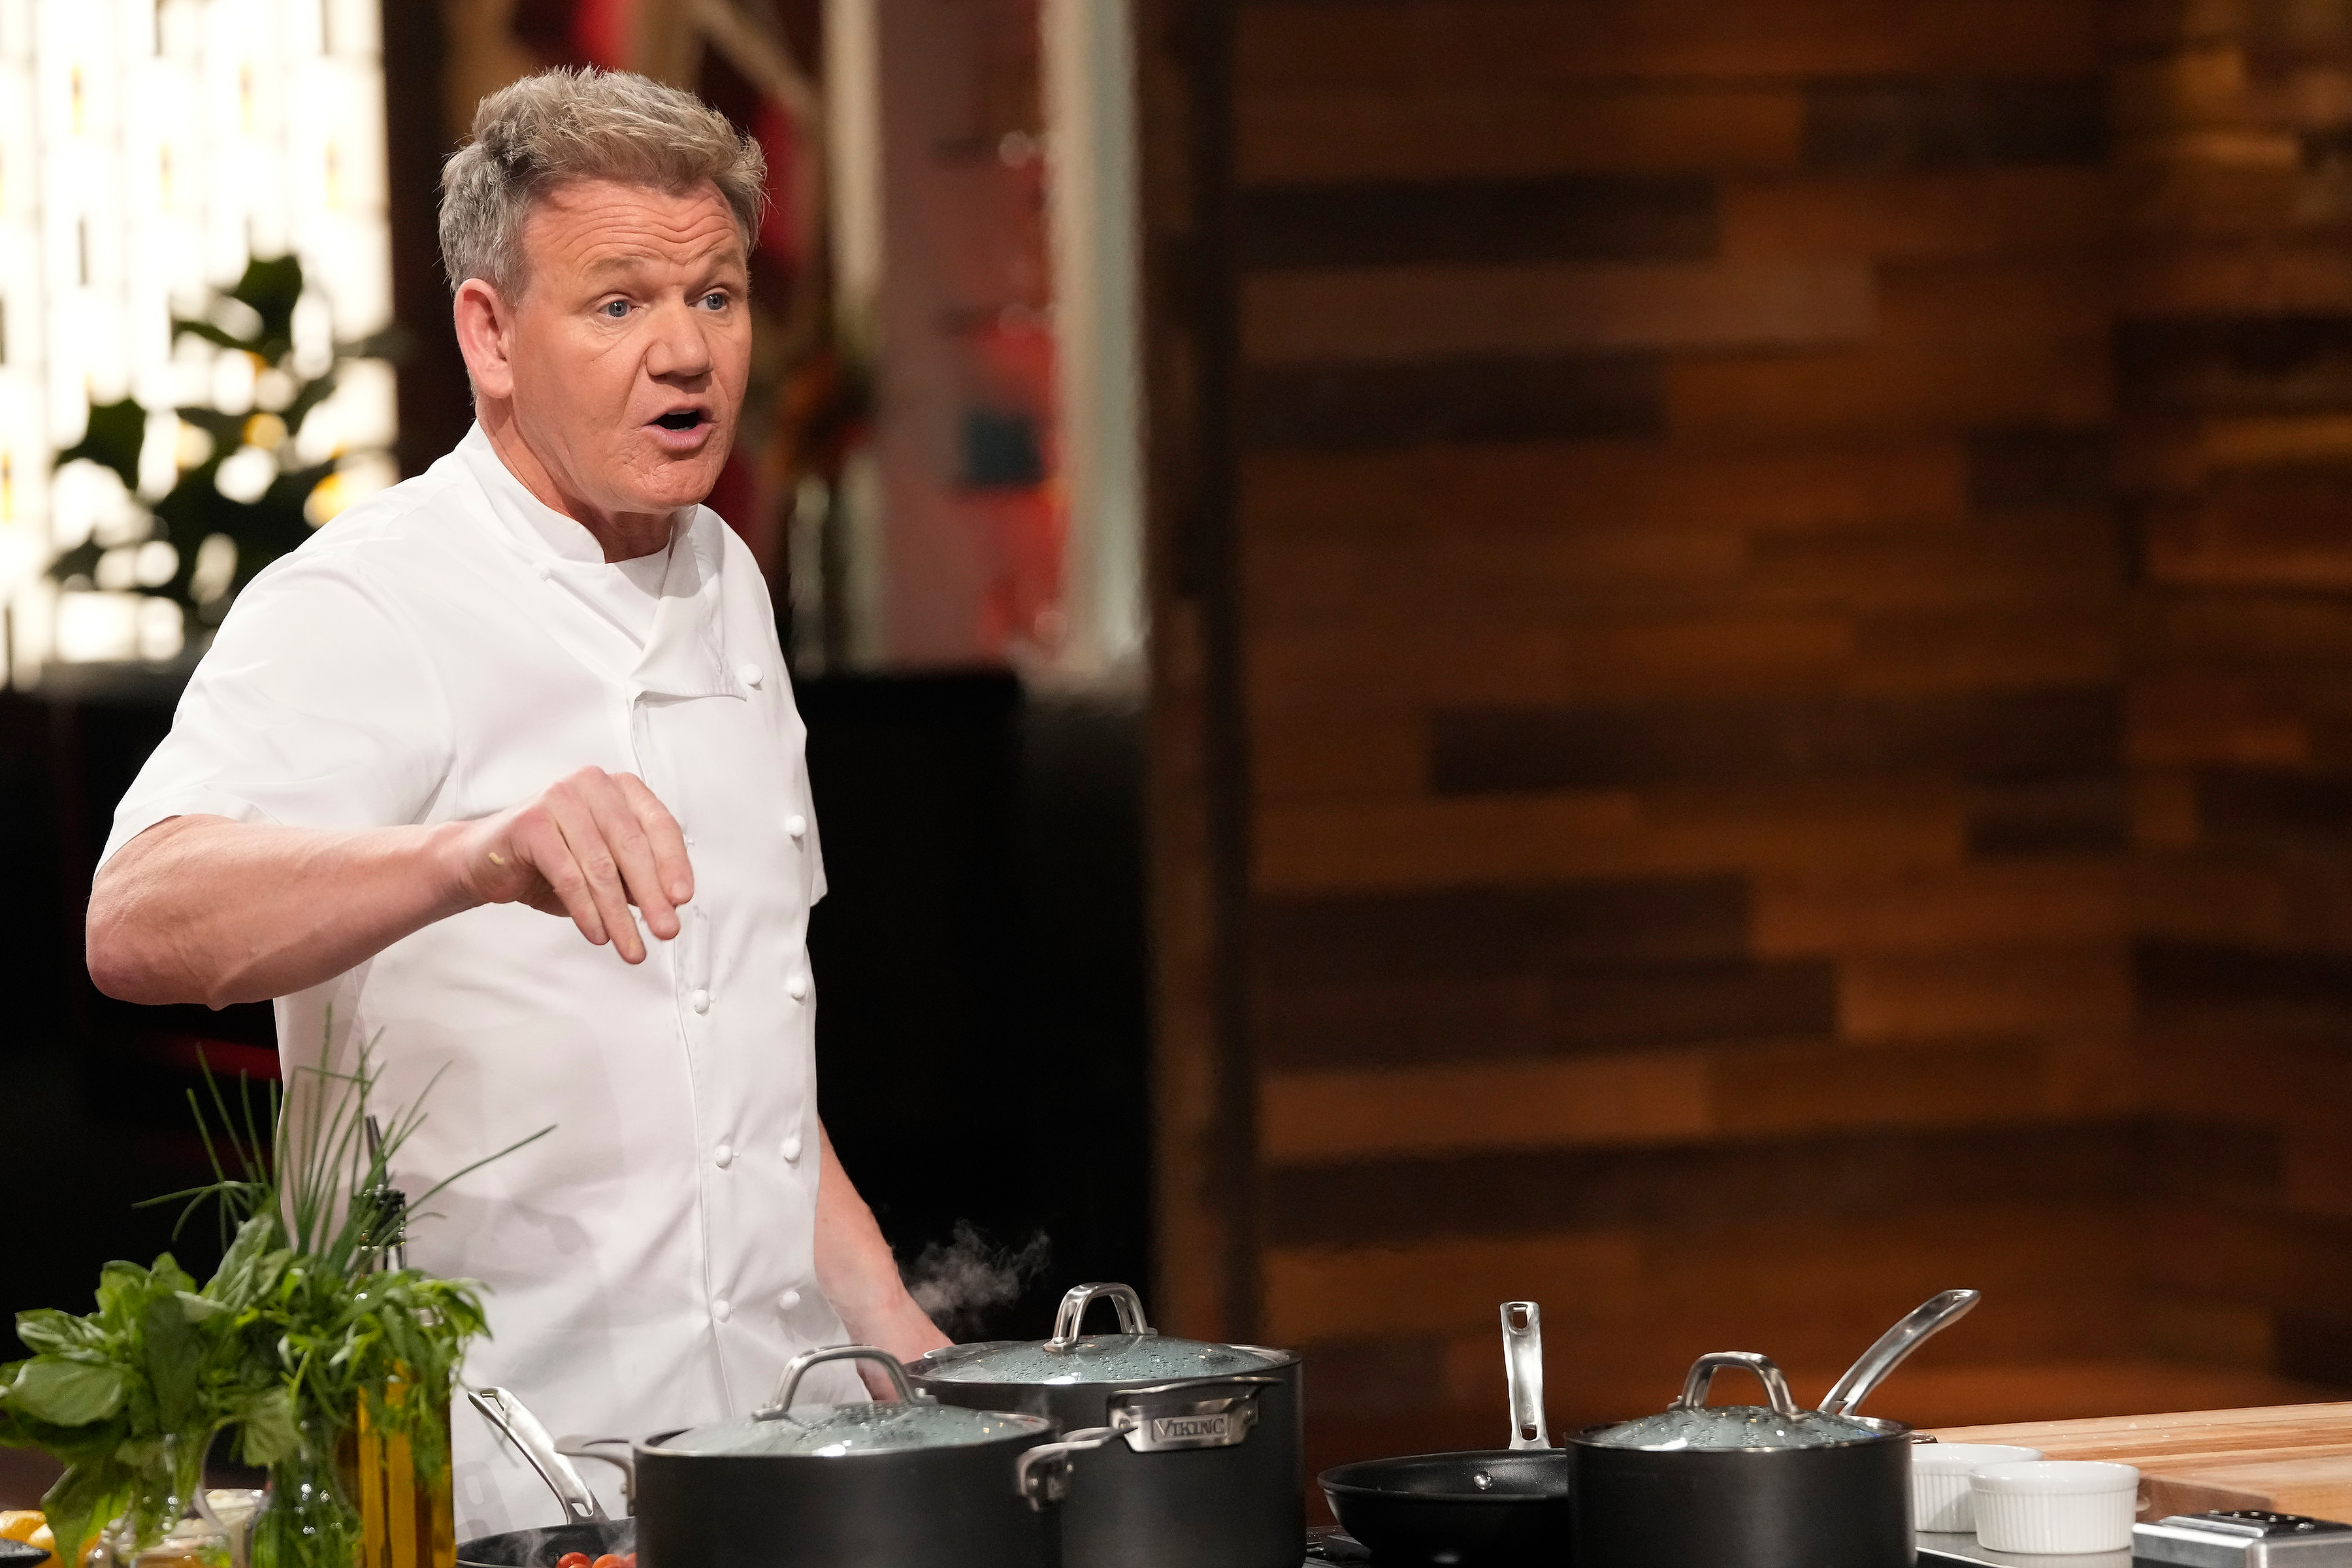 Celebrity Chef Gordon Ramsay Opening New Restaurant in Chicago Suburb – NBC Chicago